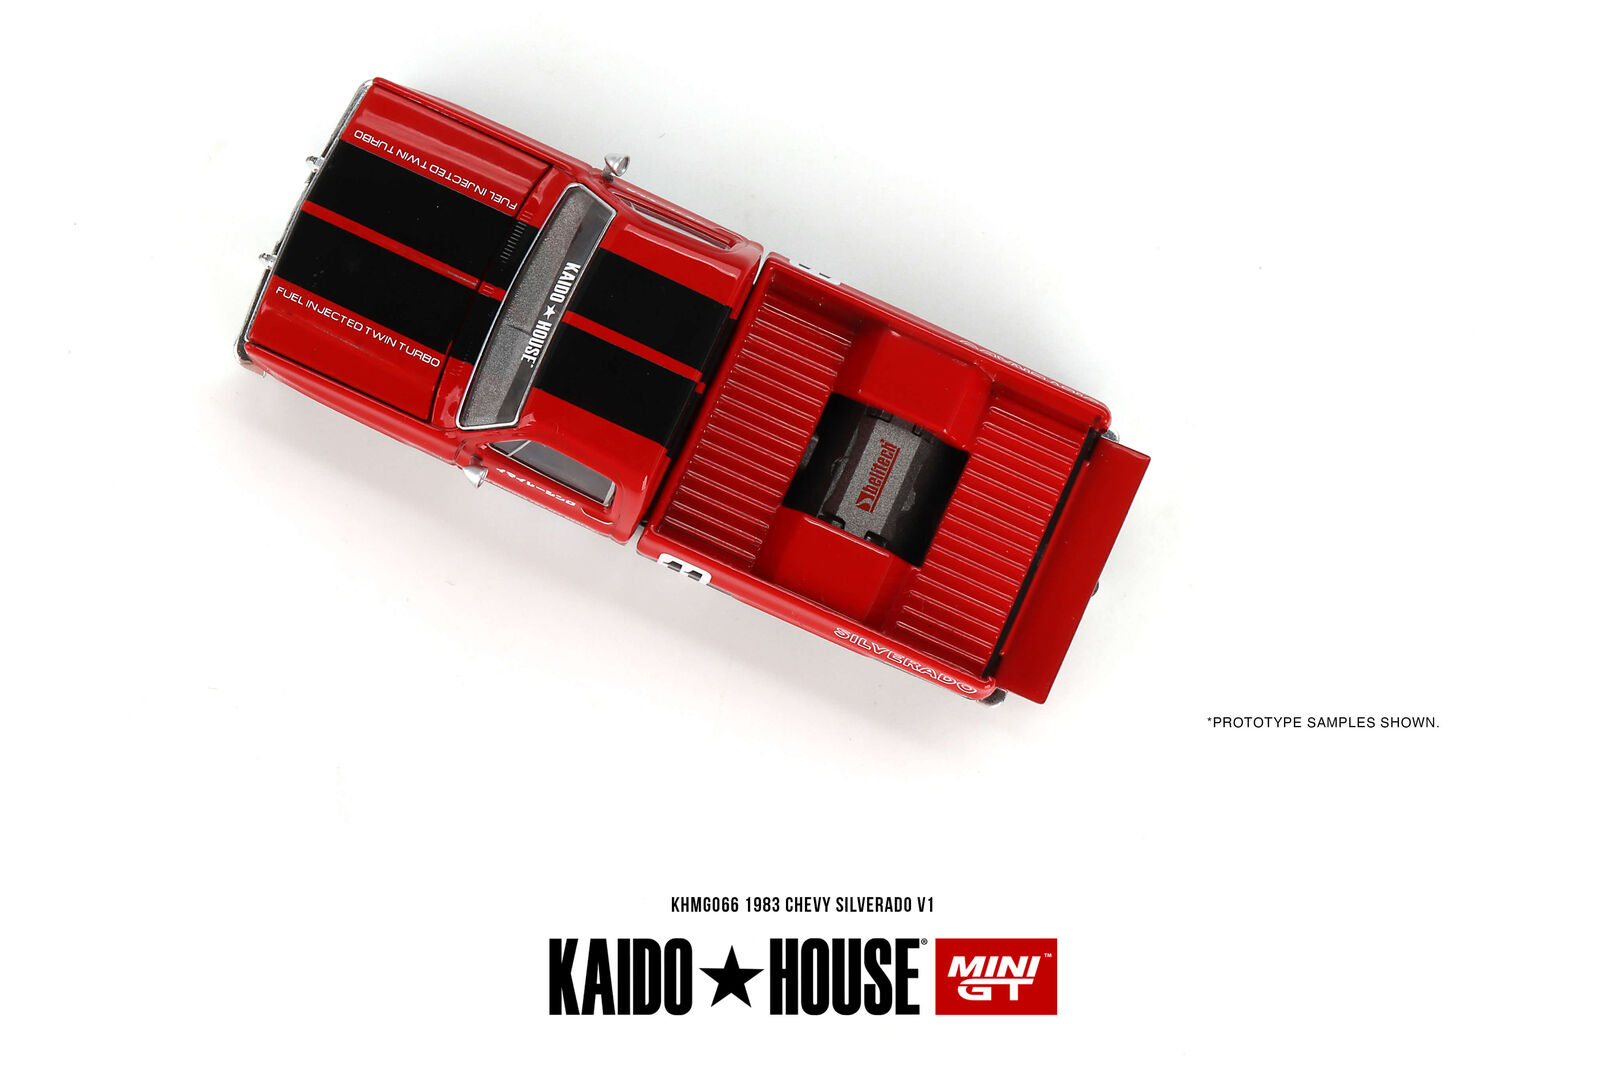 Pre-Order) Tamiya x Kaido House Nissan Skyline GT-R (R34) – Sky High Garage